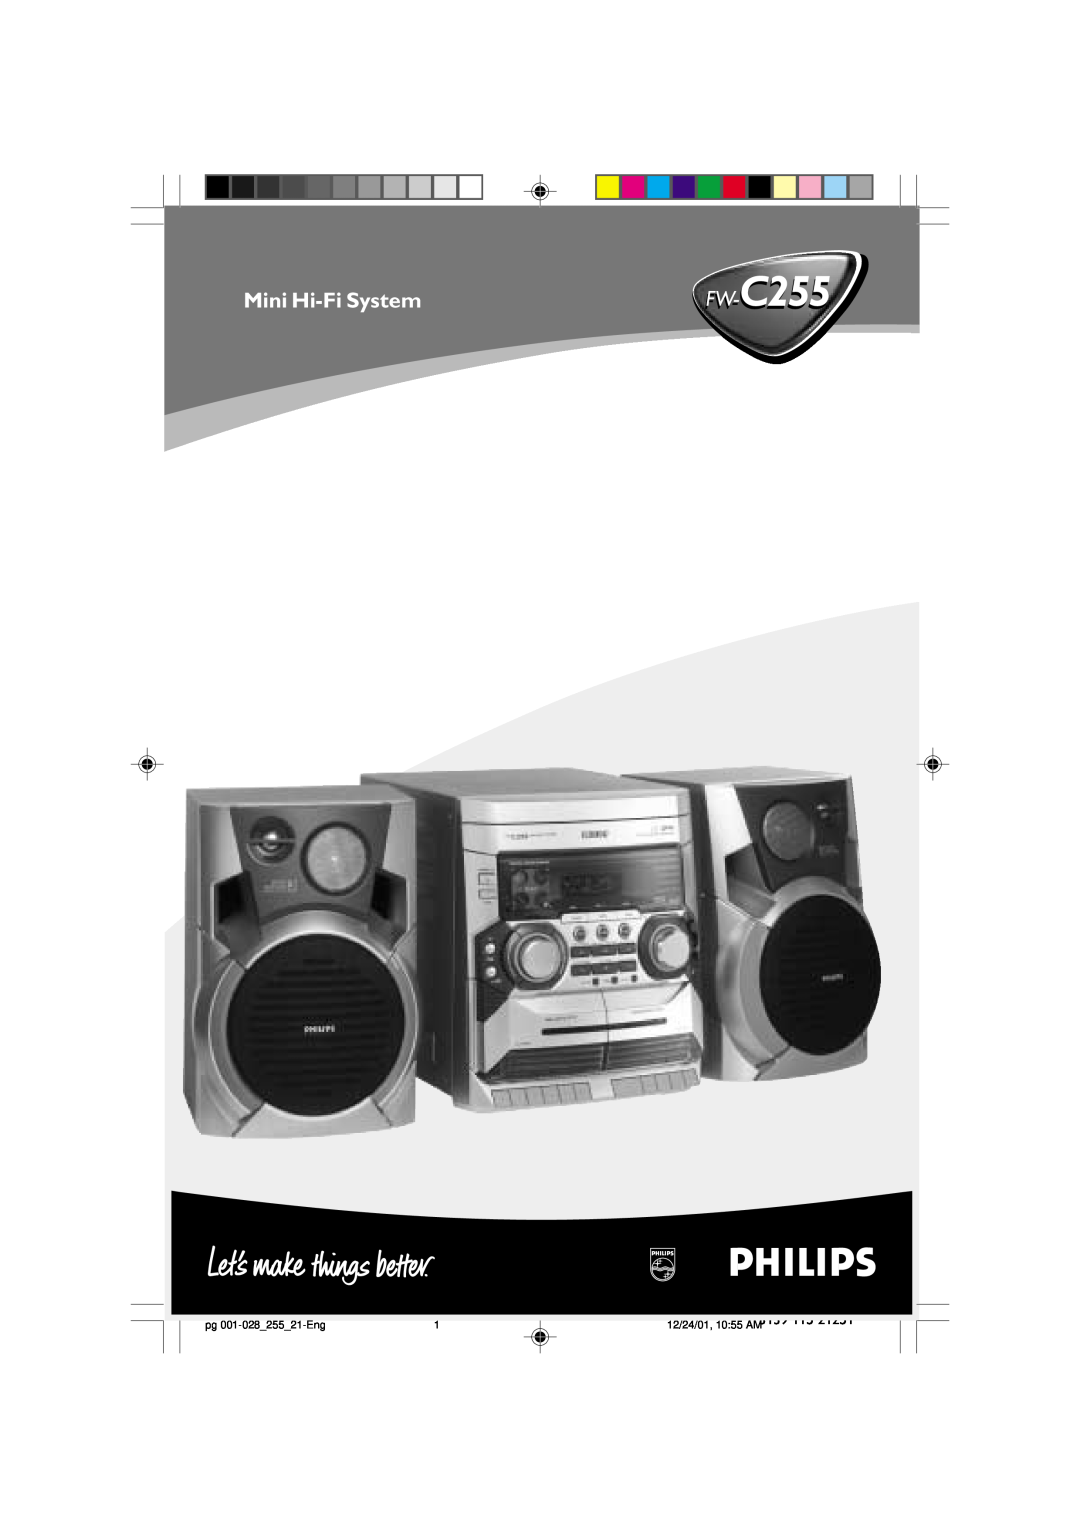 Philips C255 manual Mini Hi-FiSystem, pg 001-028 255 21-Eng, 12/24/01, 10 55 AM3139 